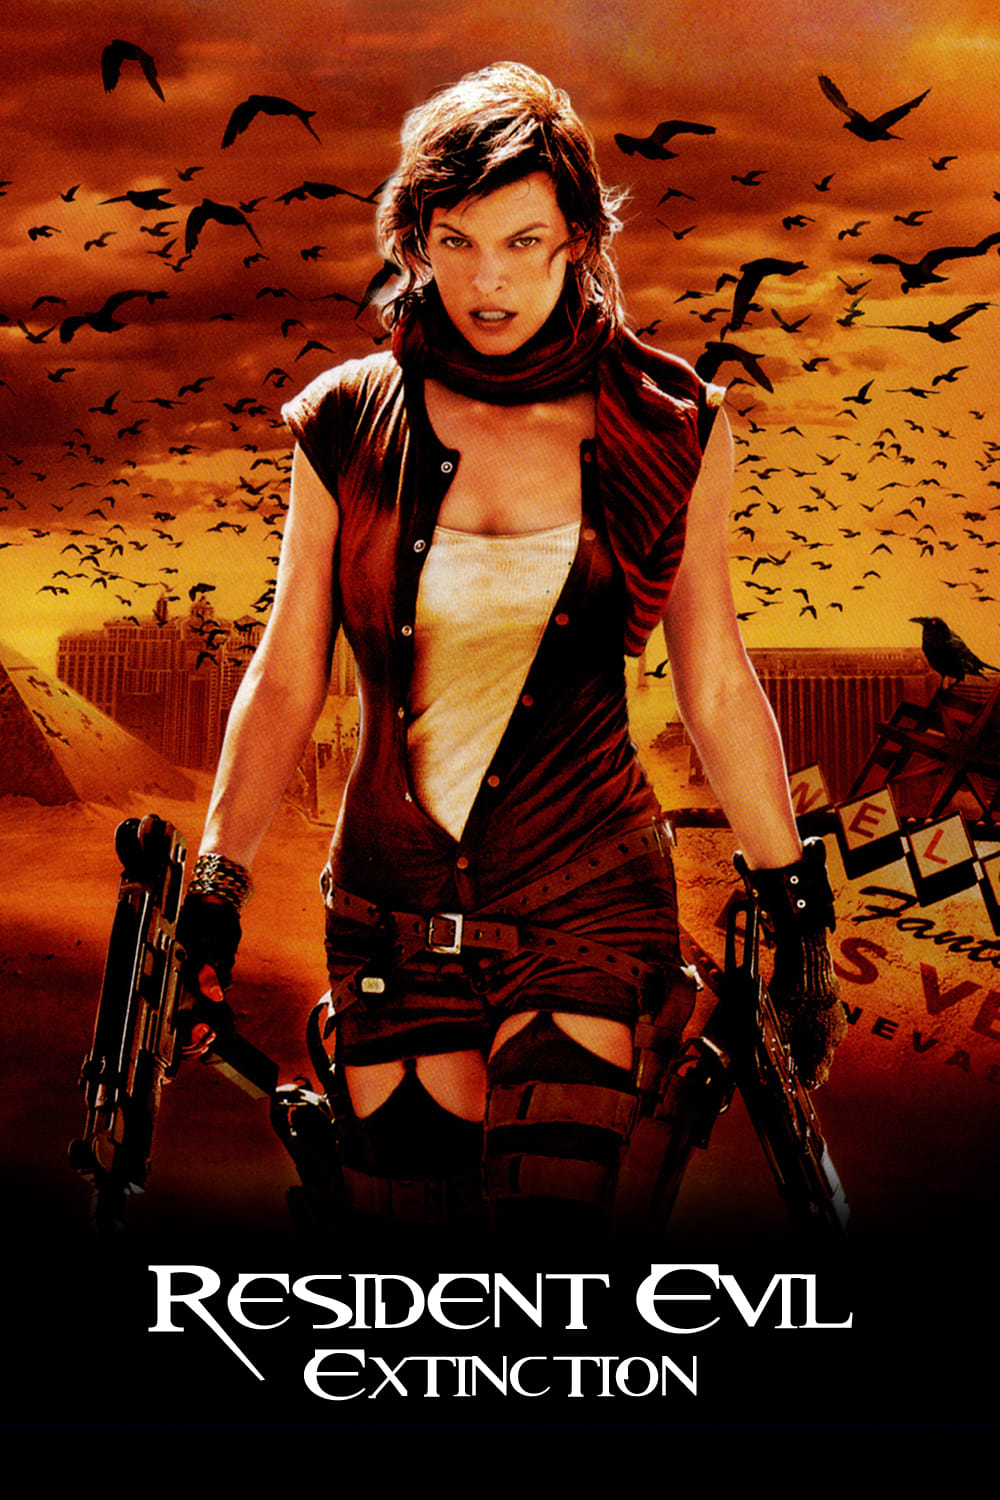 Resident evil 3: Extinction 2007 4k kvaliteta